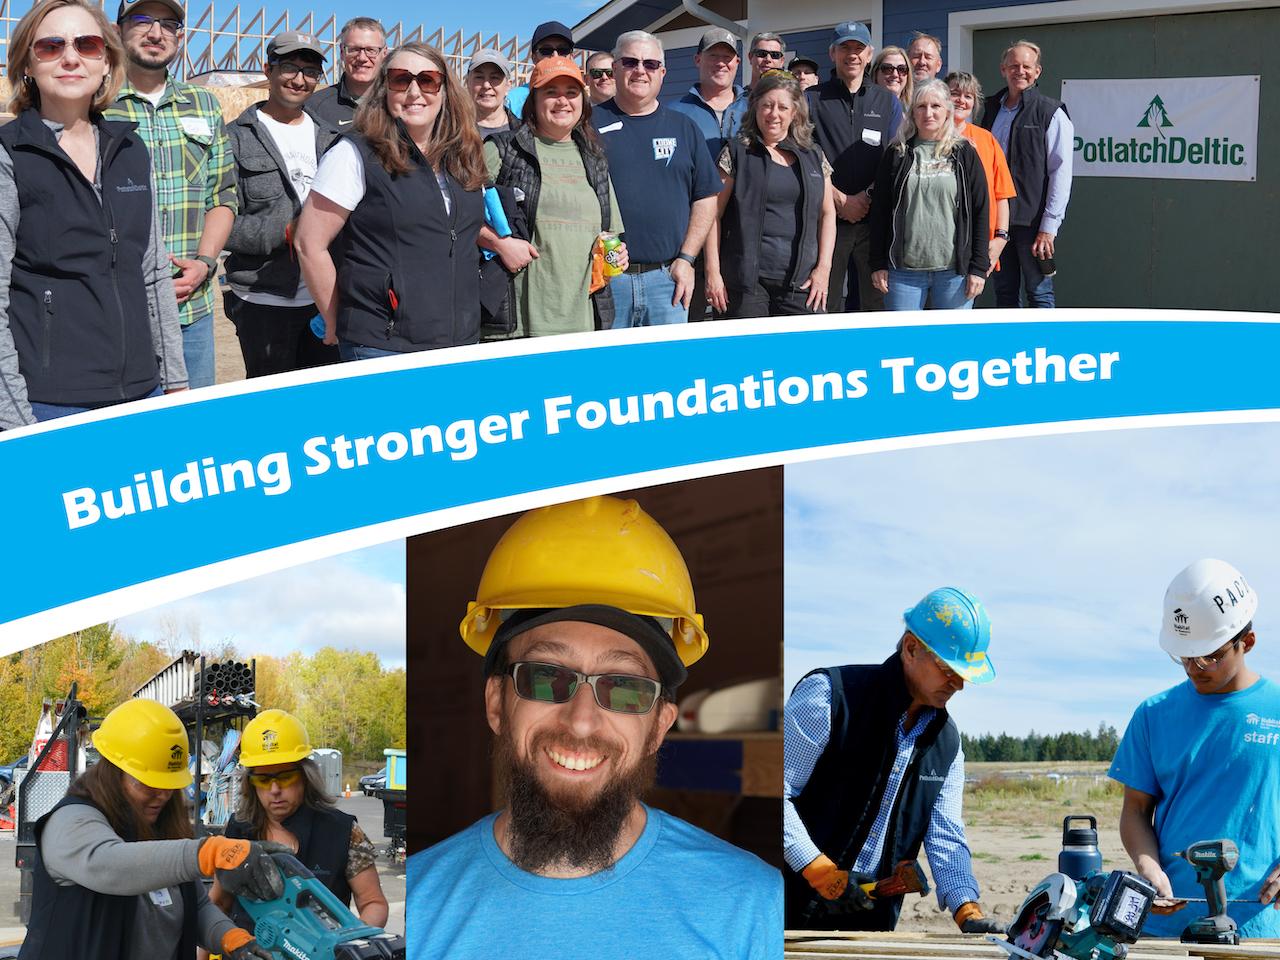 PotlatchDeltic "Building Stronger Foundations Together"